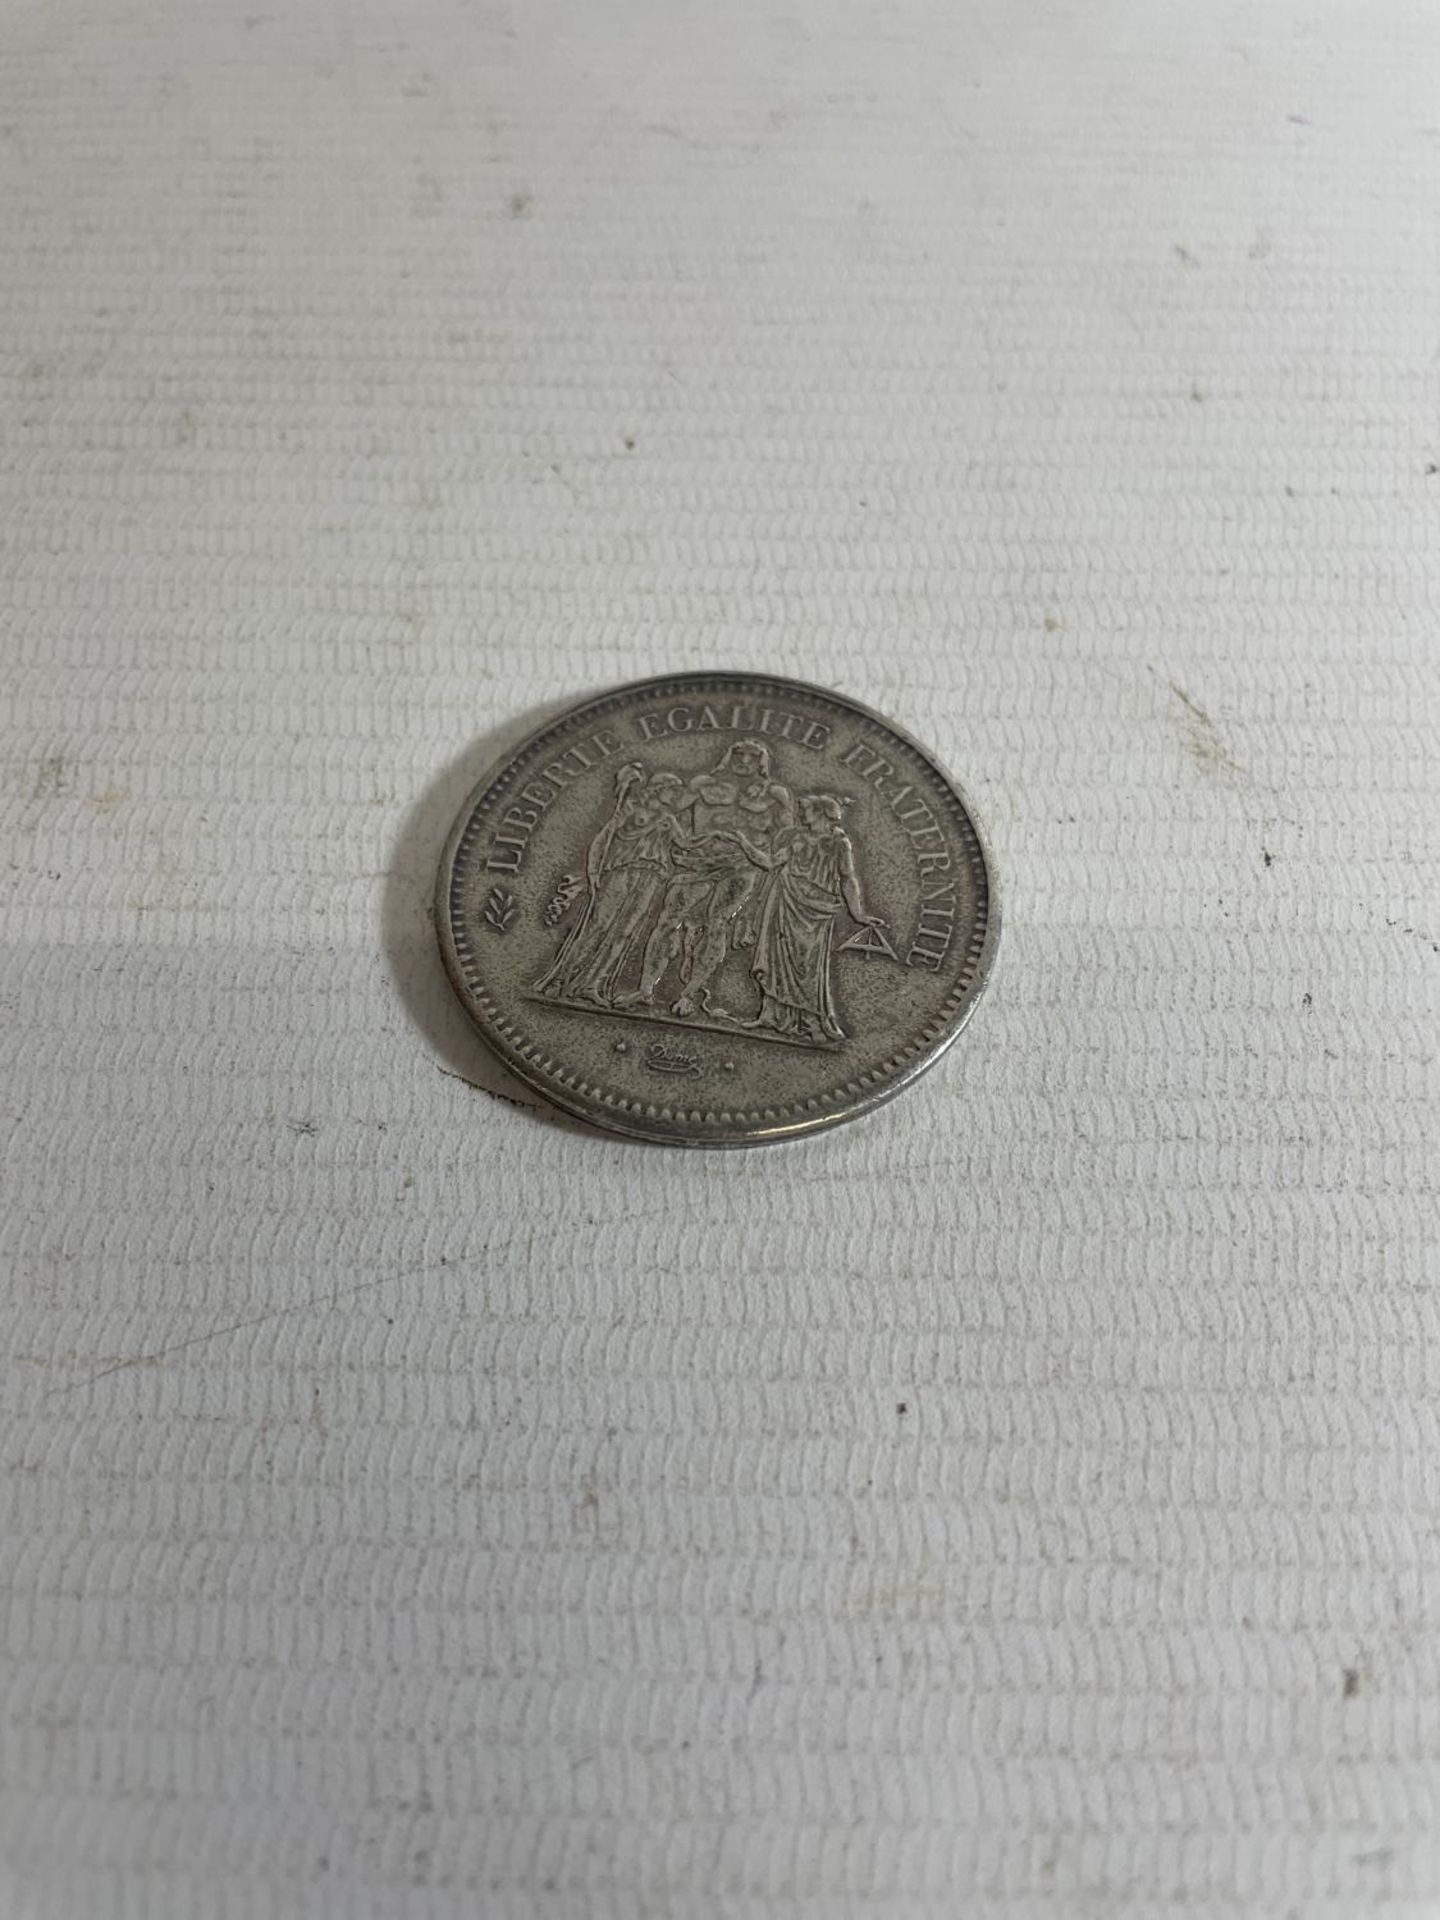 FRANCE , 1876 50 FRANC SILVER COIN